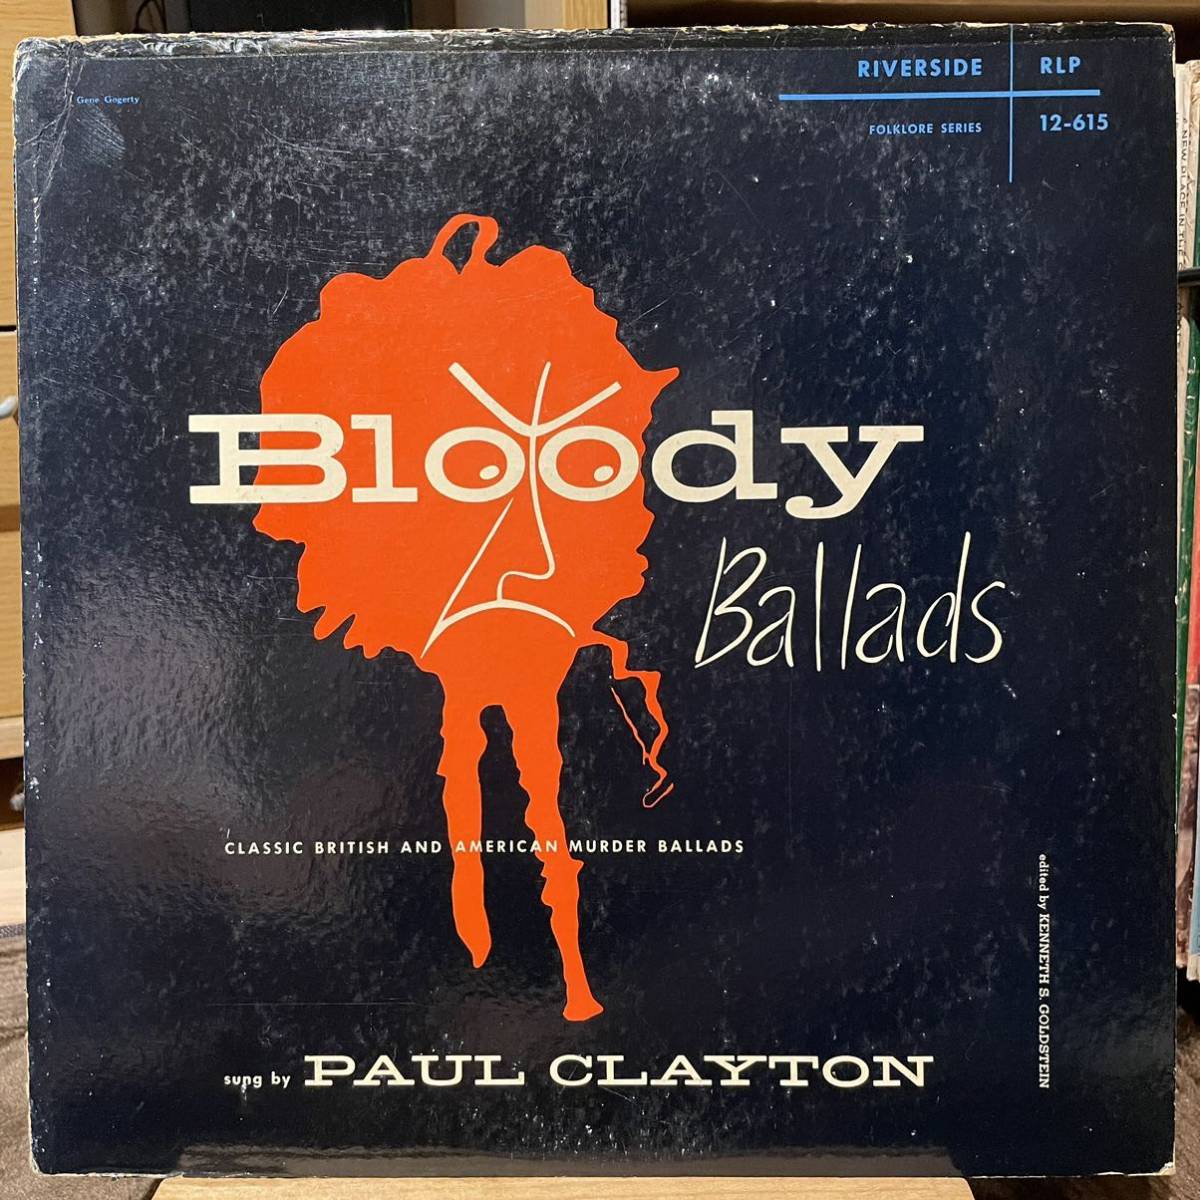 【US盤Org.深溝Riverside青銀】Paul Clayton Bloody Ballads (1956) RLP 12-615 Mono盤 Folklore Series レア old ballads folk_画像1